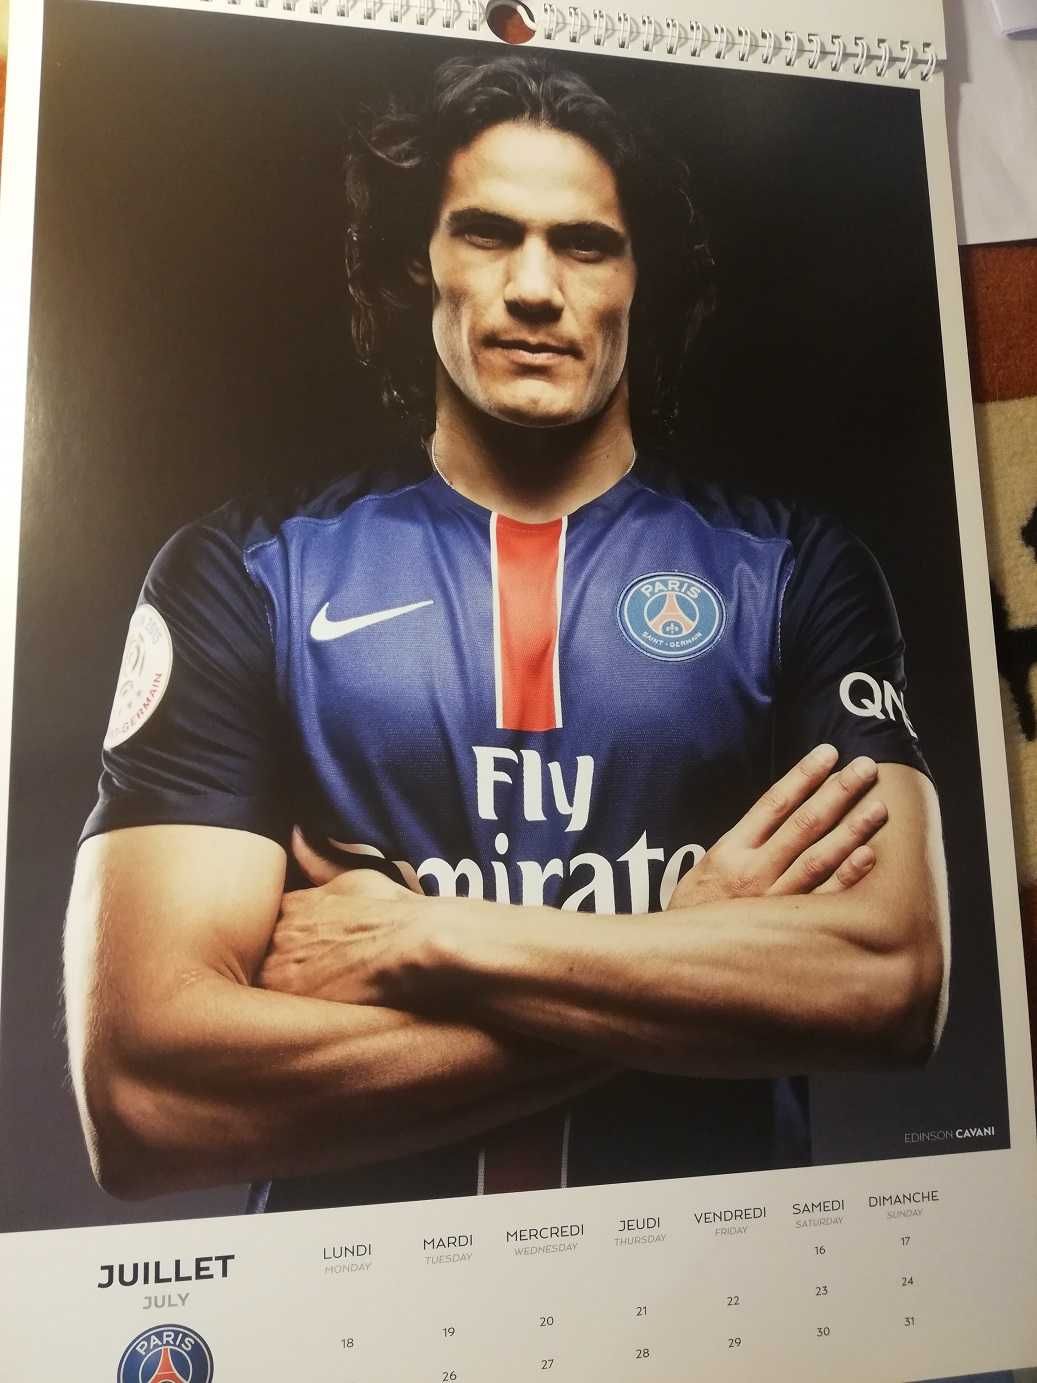 Oryginalny kalendarz klubu Paris St. Germain 2016